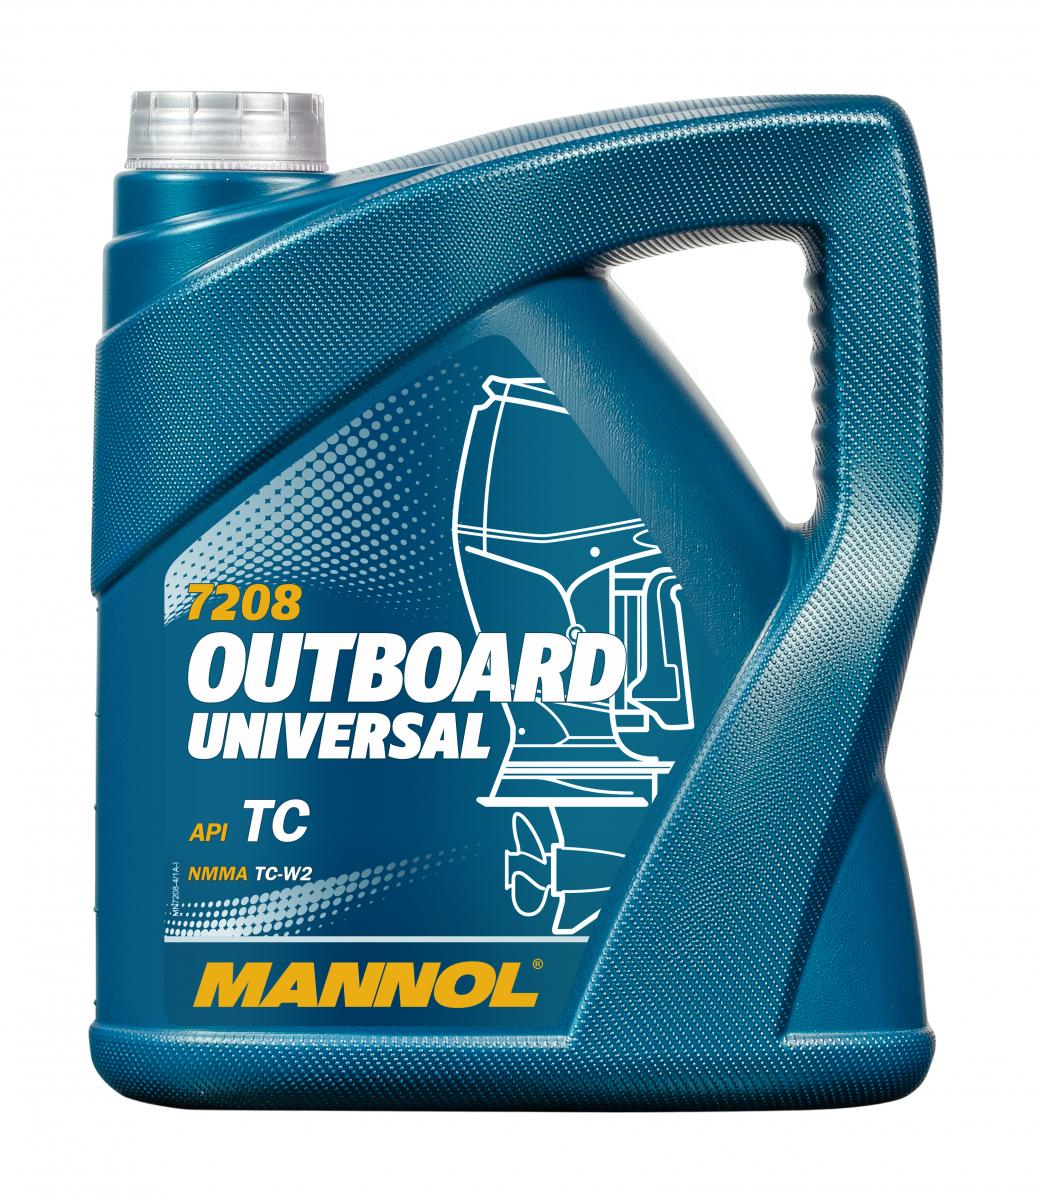 16 Liter (4x4) MANNOL Outboard Universal API TC Motoröl Außenbordmotoröl